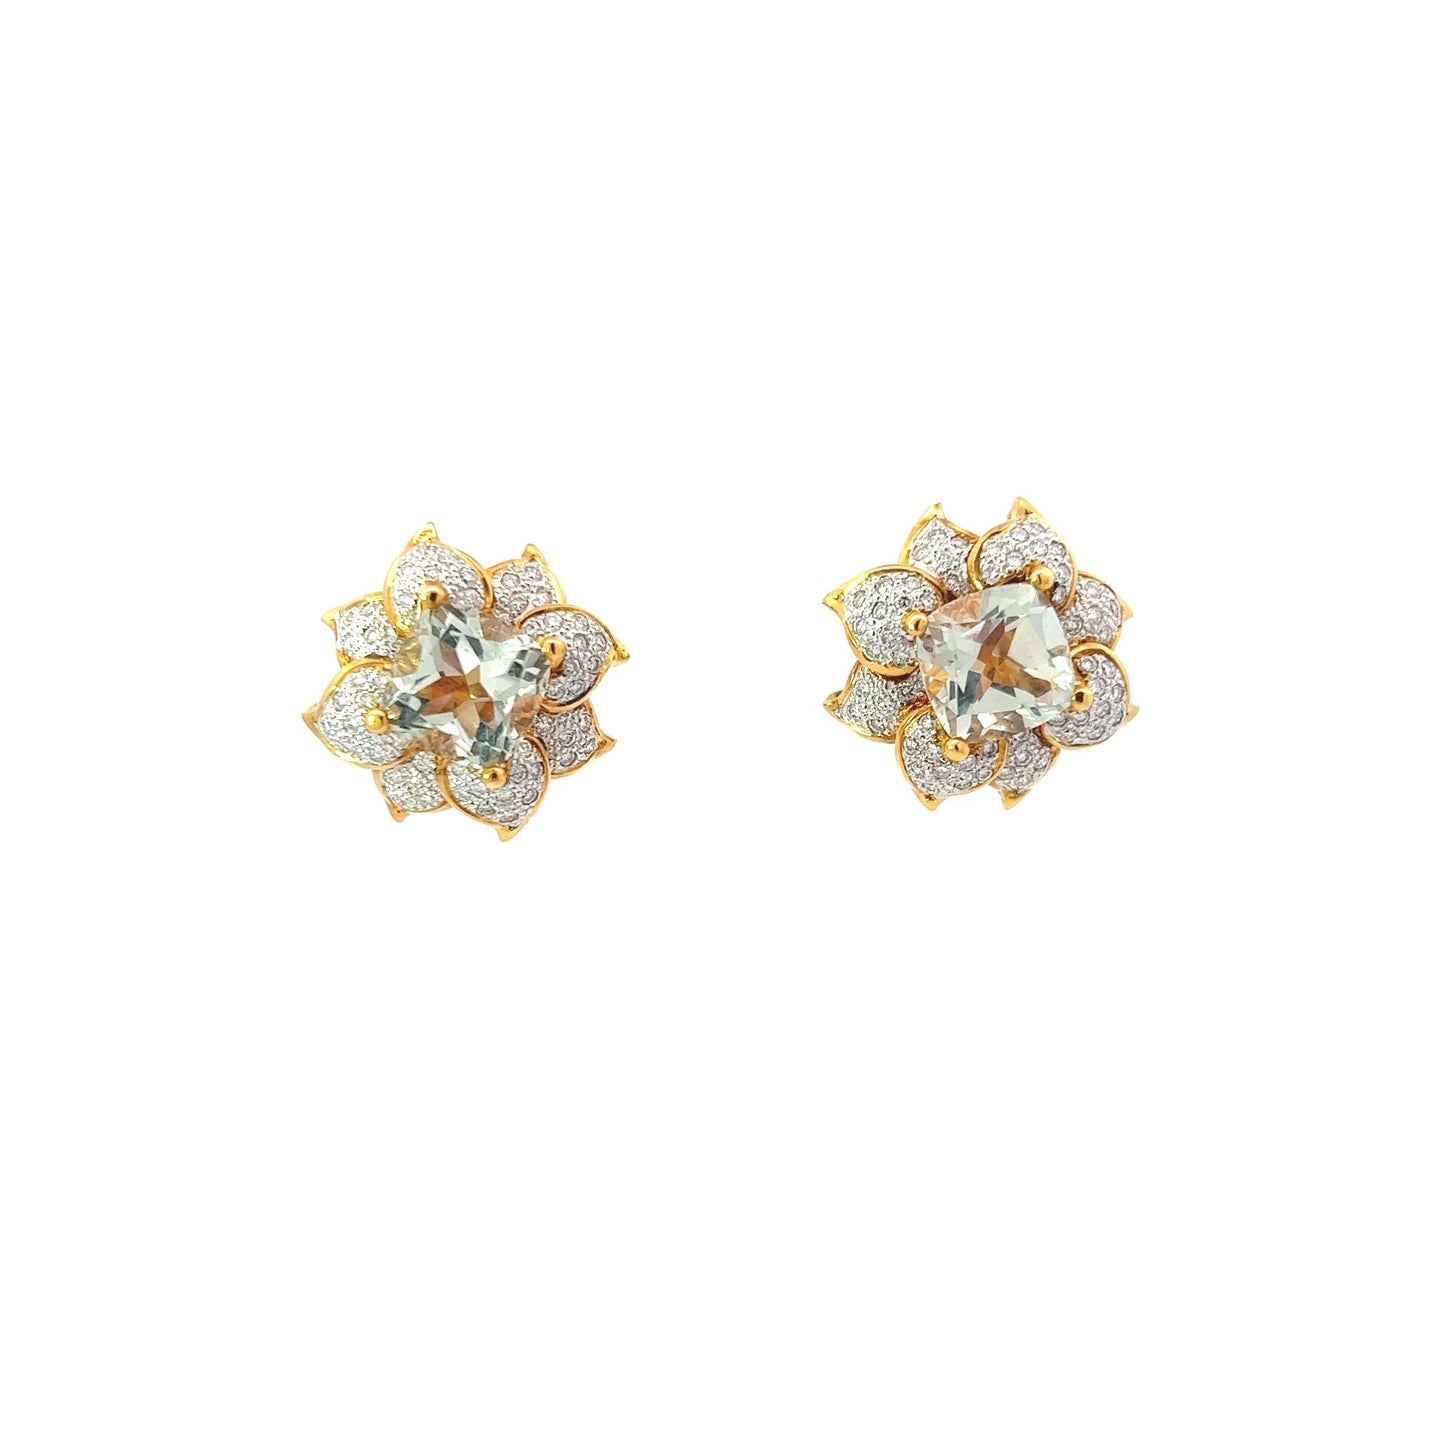 Earrings w/ 2 Colored Stones & 115 Diamonds